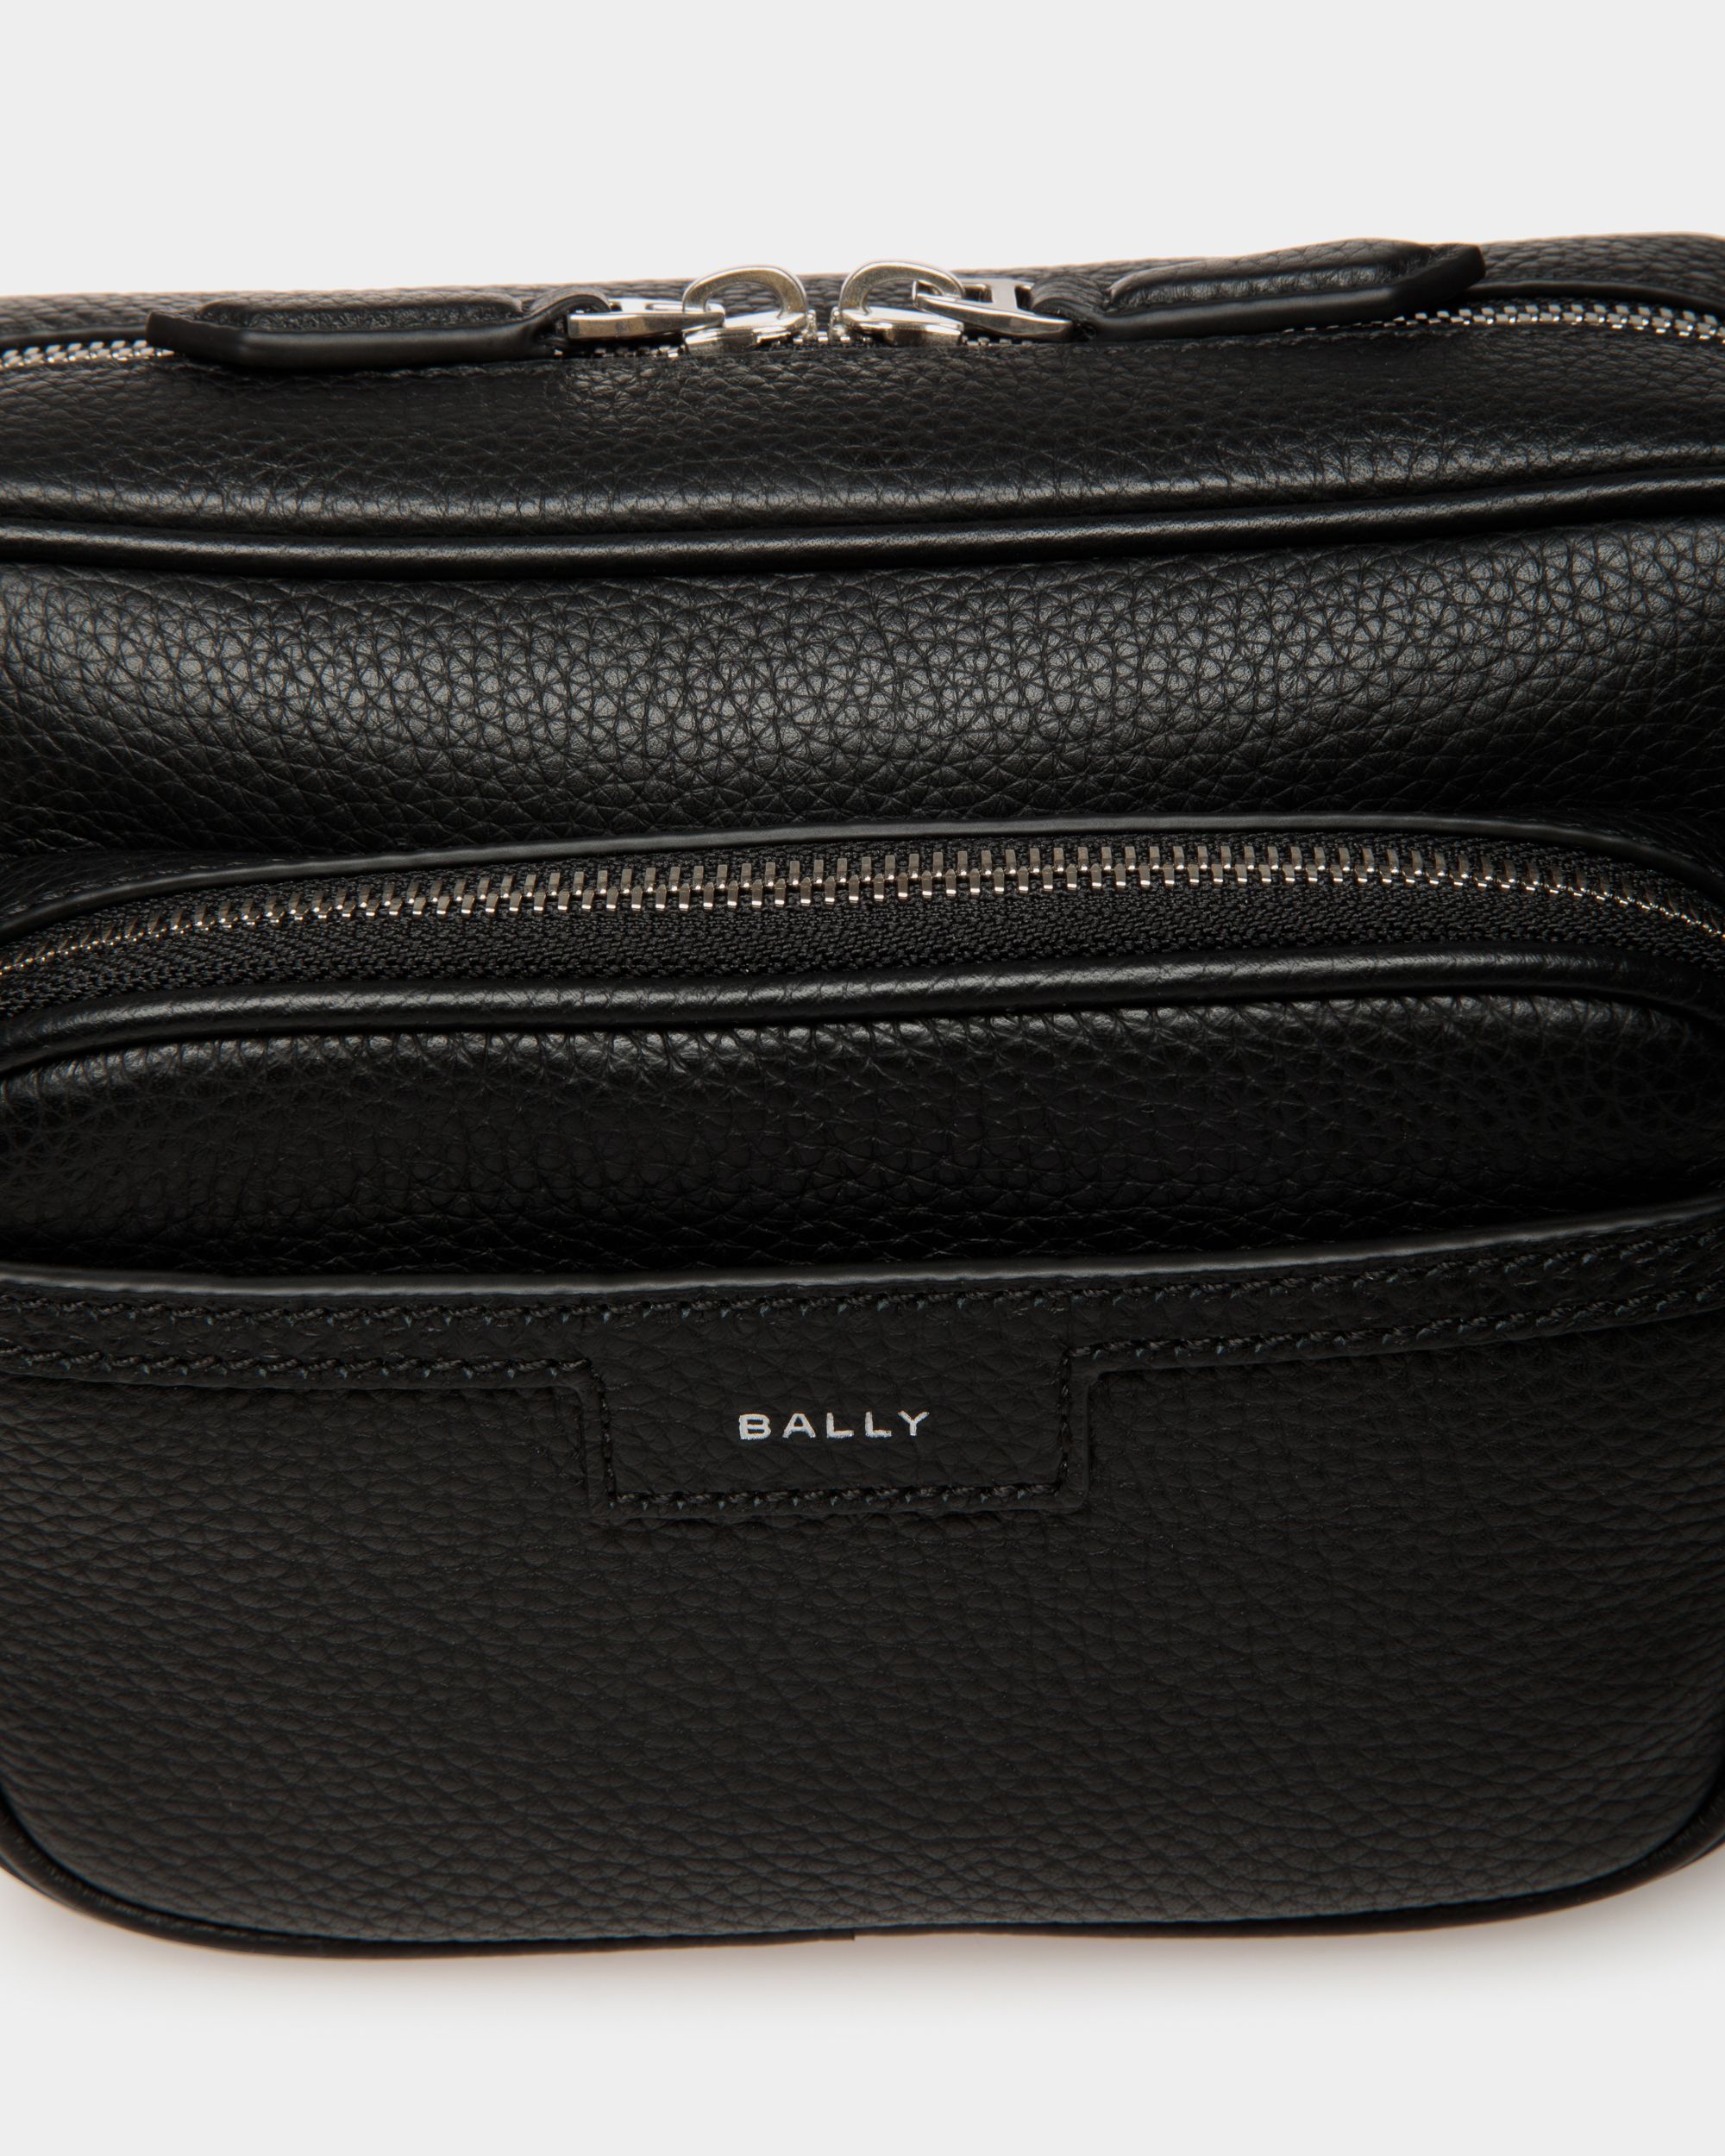 Code | Men's Crossbody Bag in Black Grained Leather | Bally | Still Life Detail